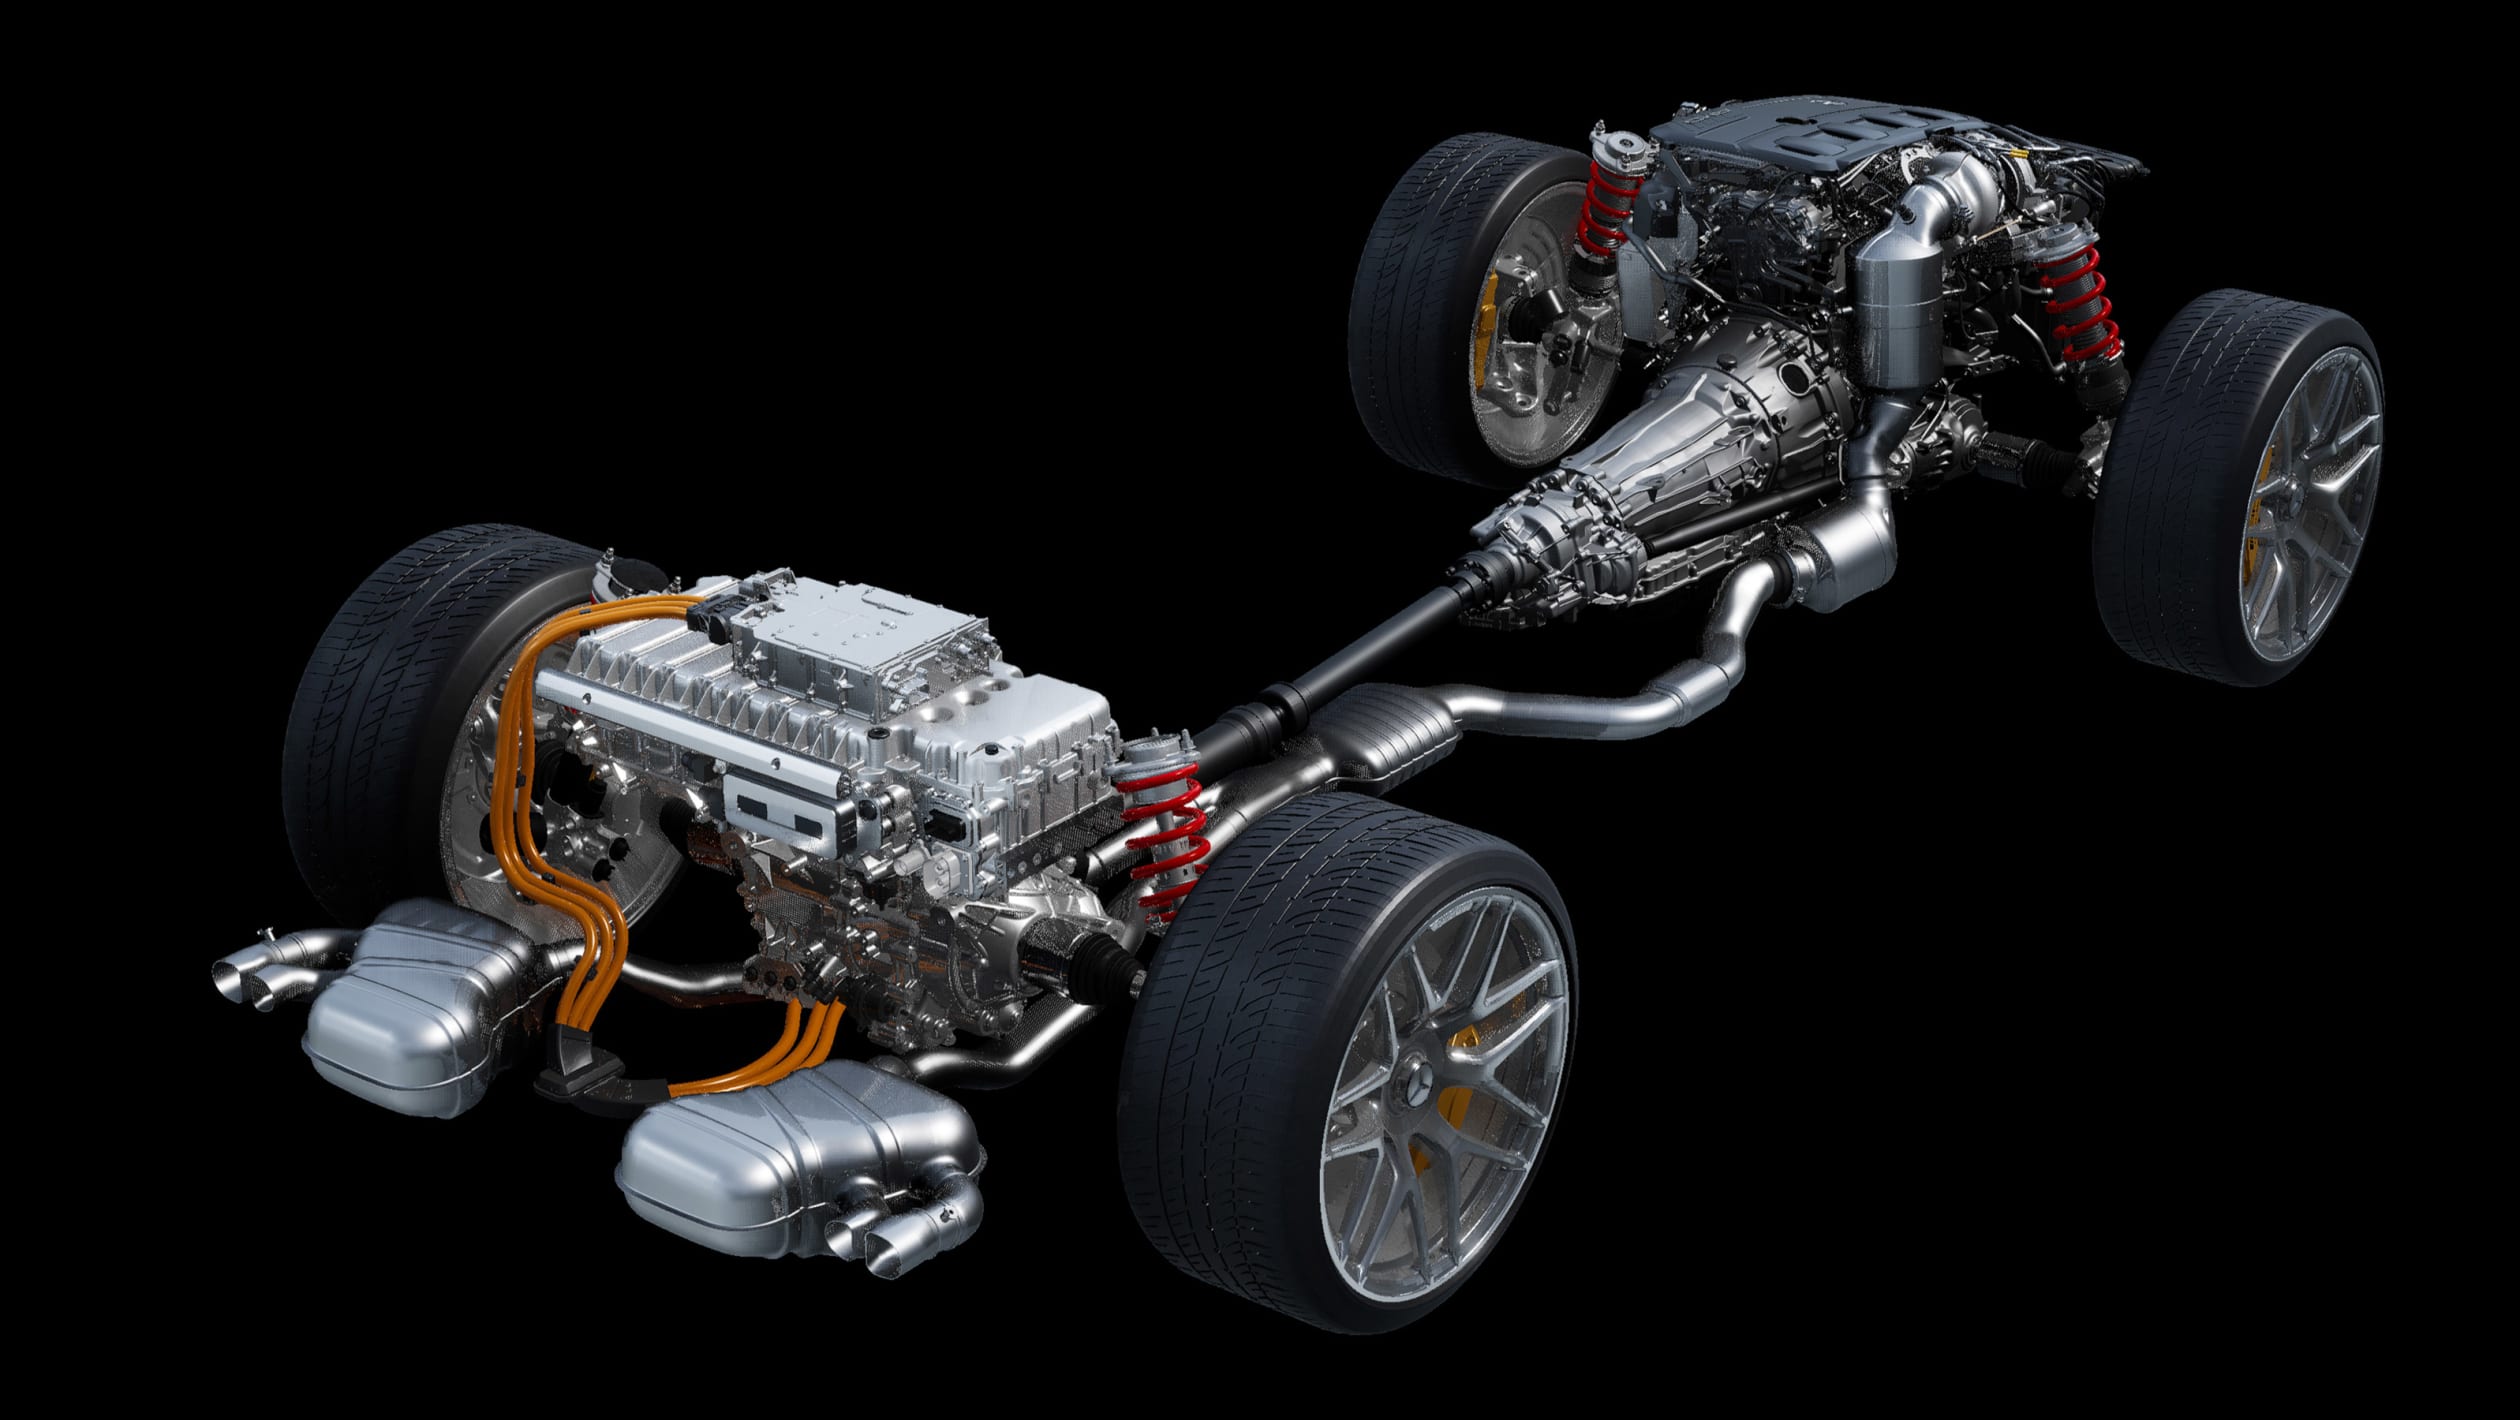 2022 Mercedes AMG C63 powertrain